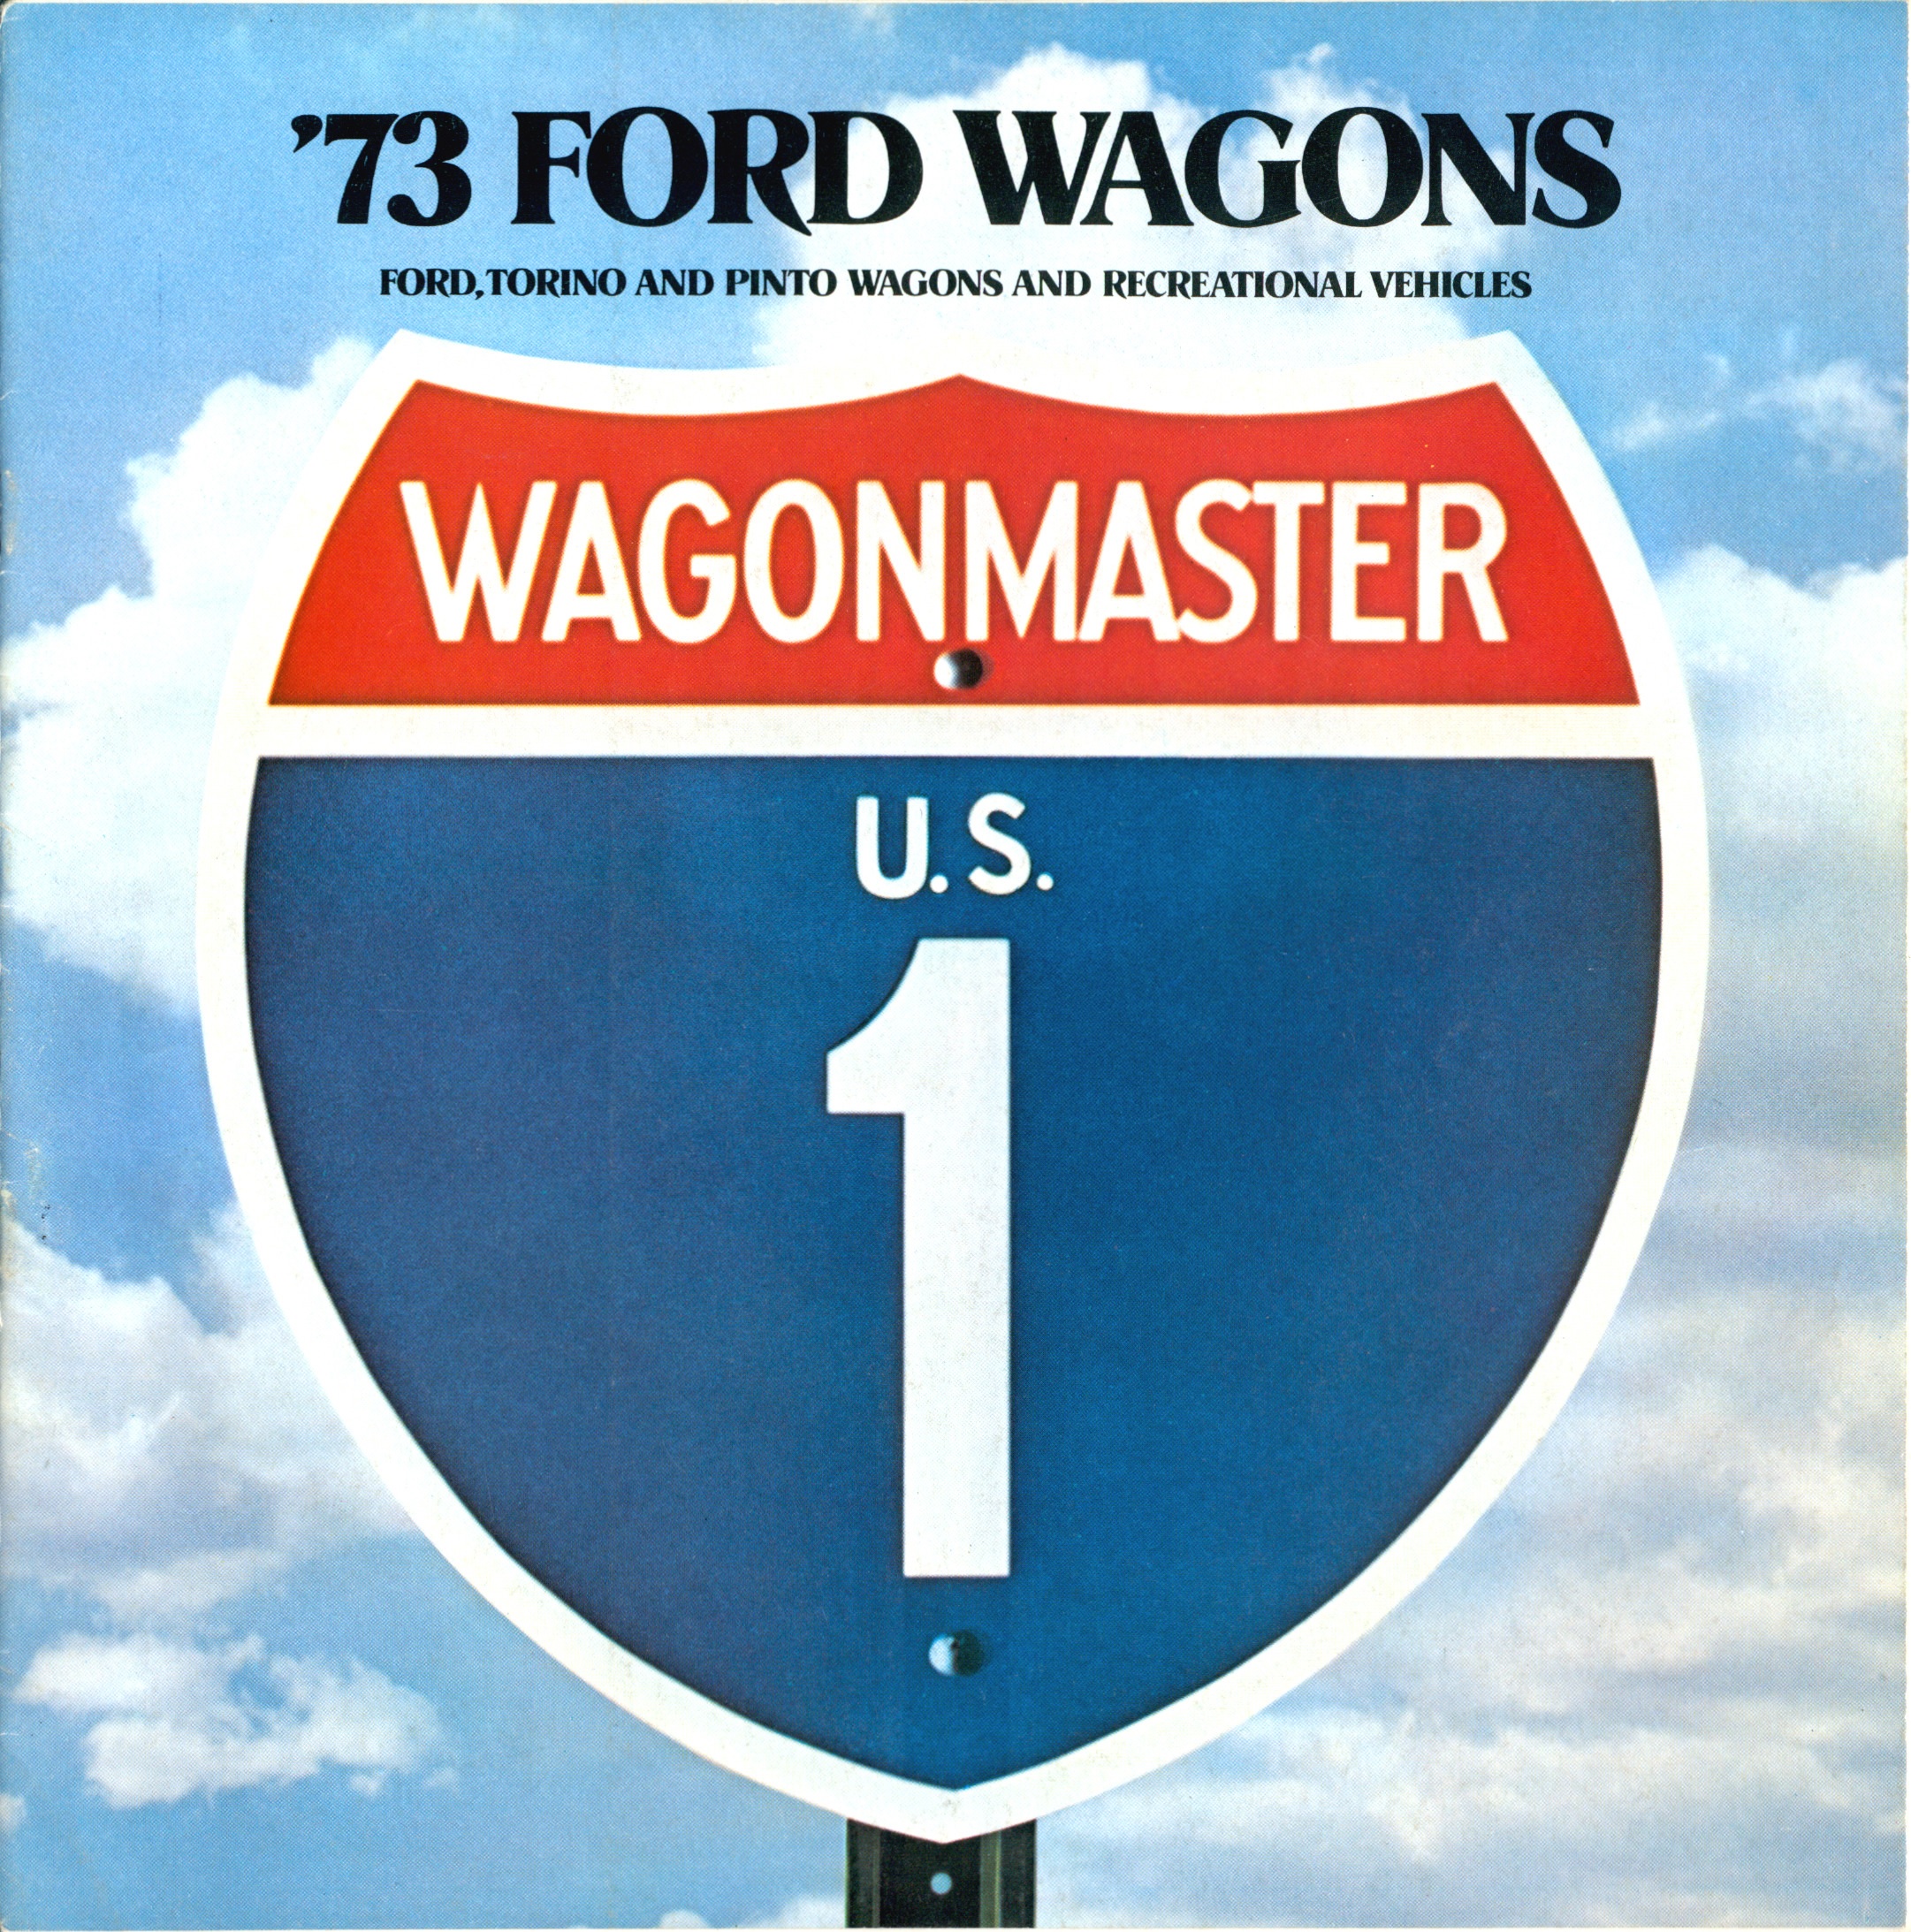 1973 Ford Wagons Brochure (Rev) 01